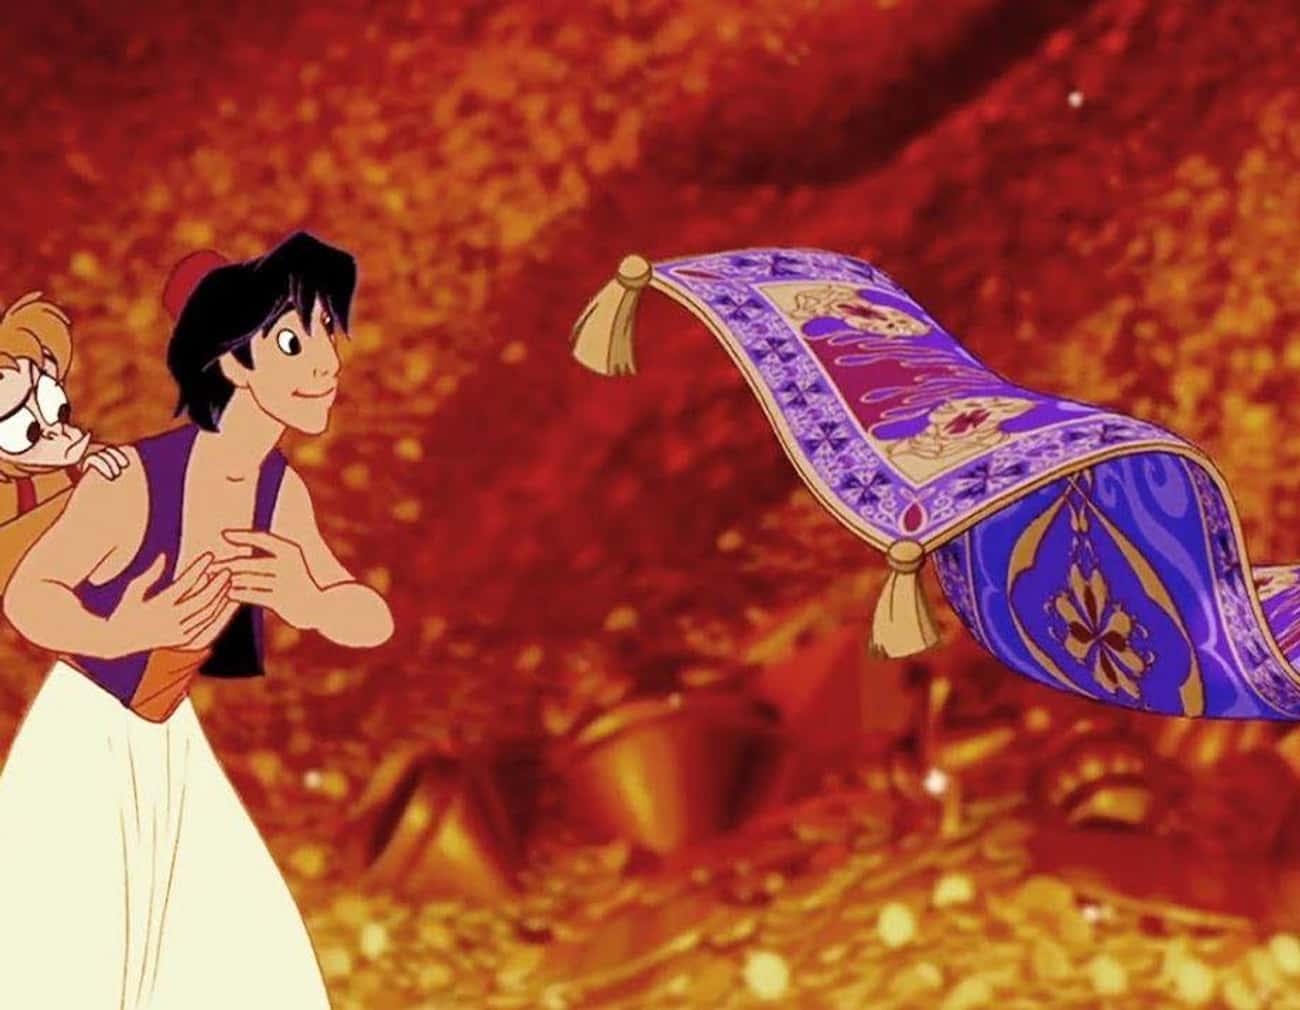 Magic Carpet From 'Aladdin'